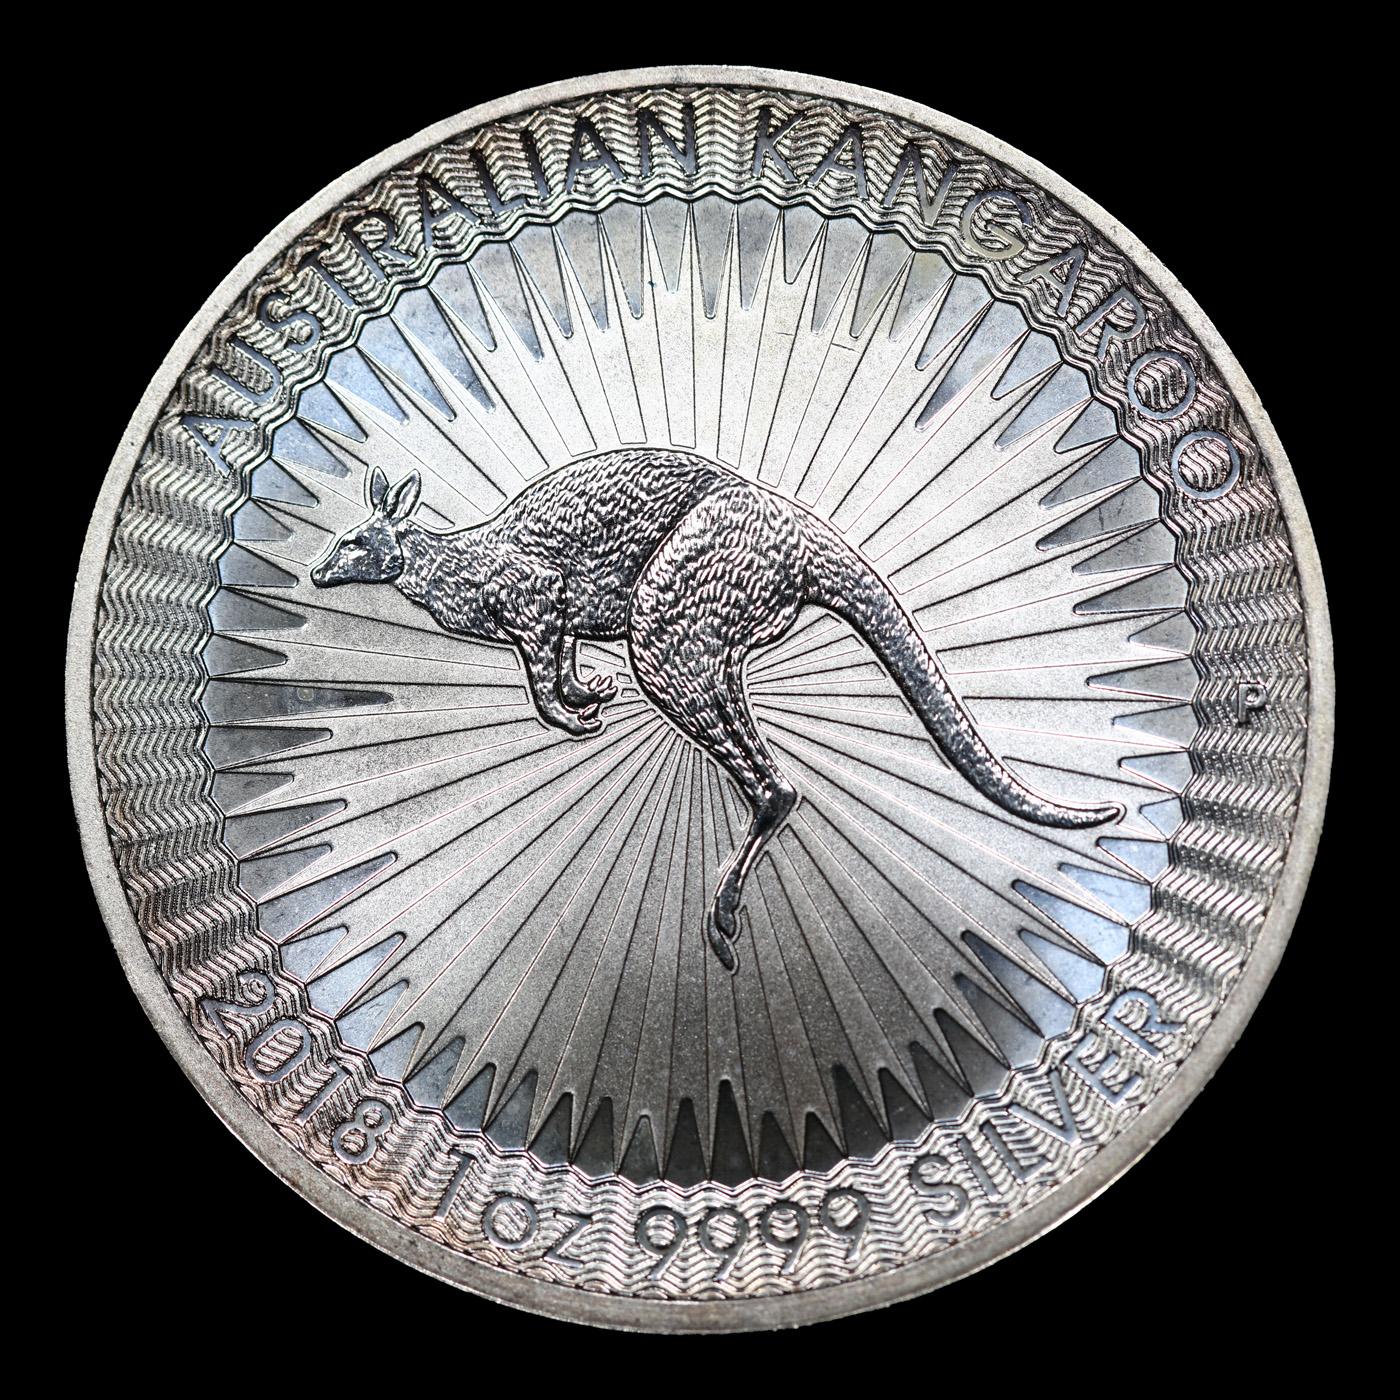 2018 Australia Perth Mint Kangaroo Silver Bullion Series Grades Brilliant Uncirculated